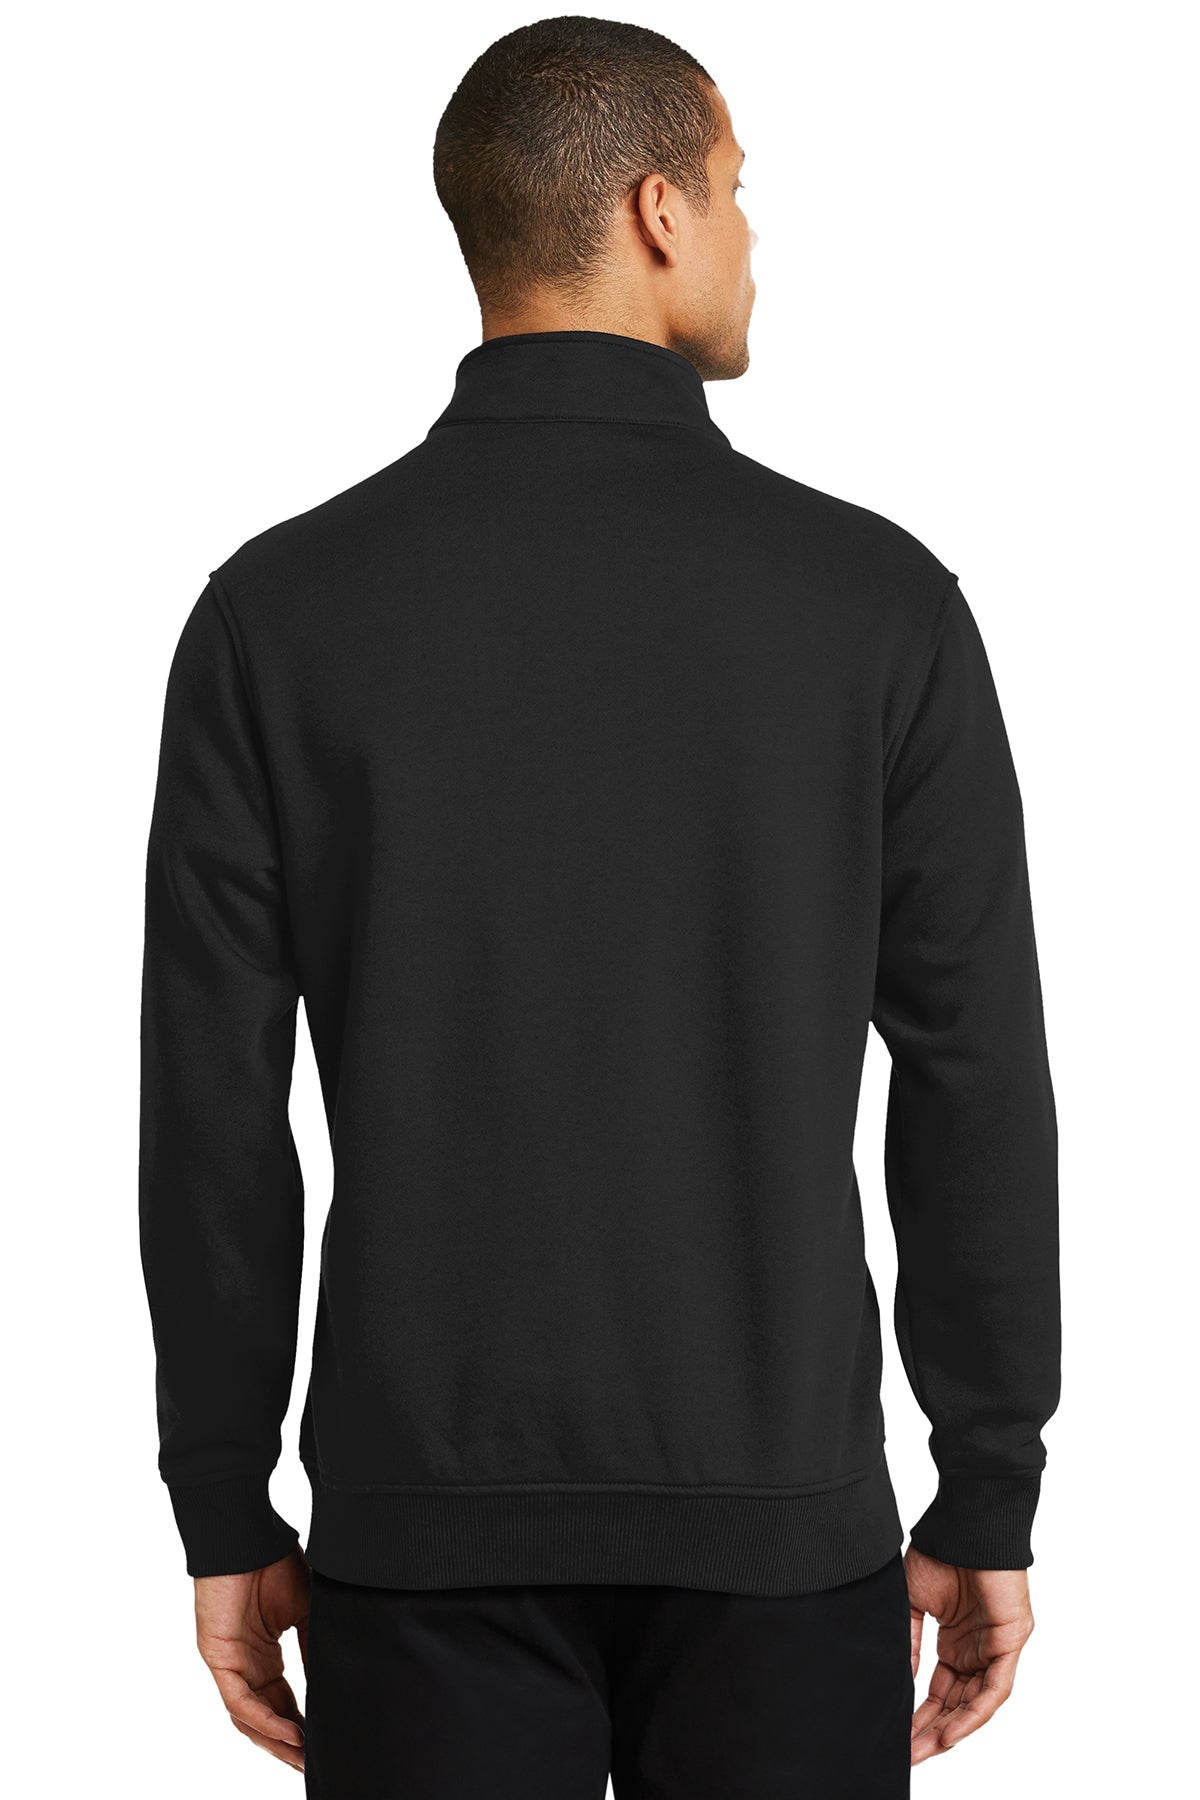 cornerstone_cs626 _black_company_logo_sweatshirts